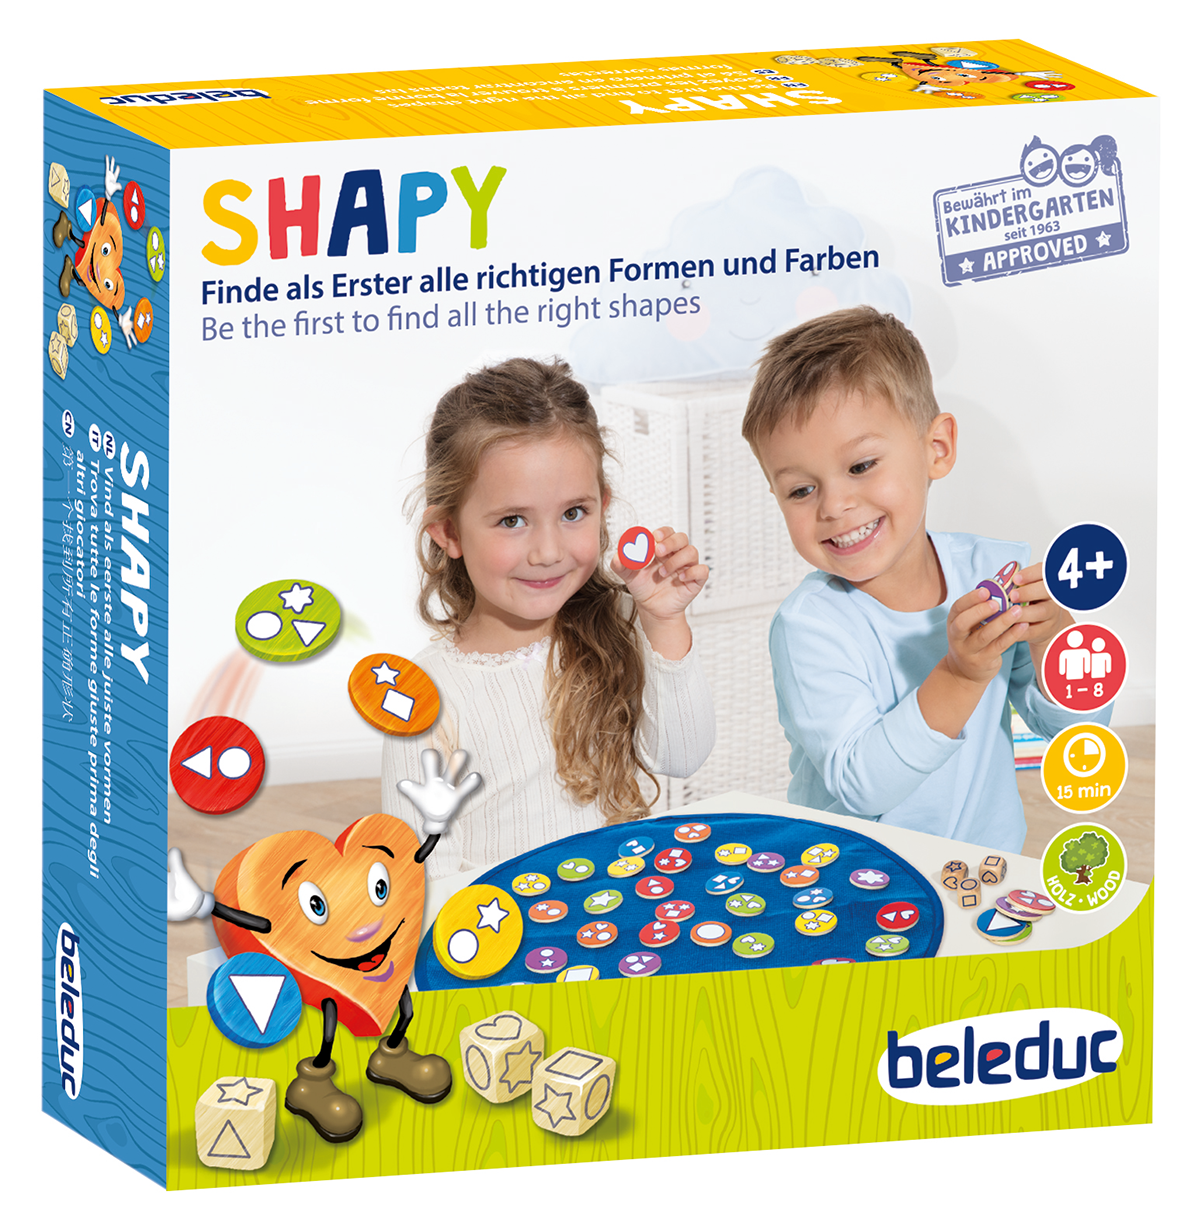 Beleduc Shapy Matching Game 形狀與顏色快速配對遊戲